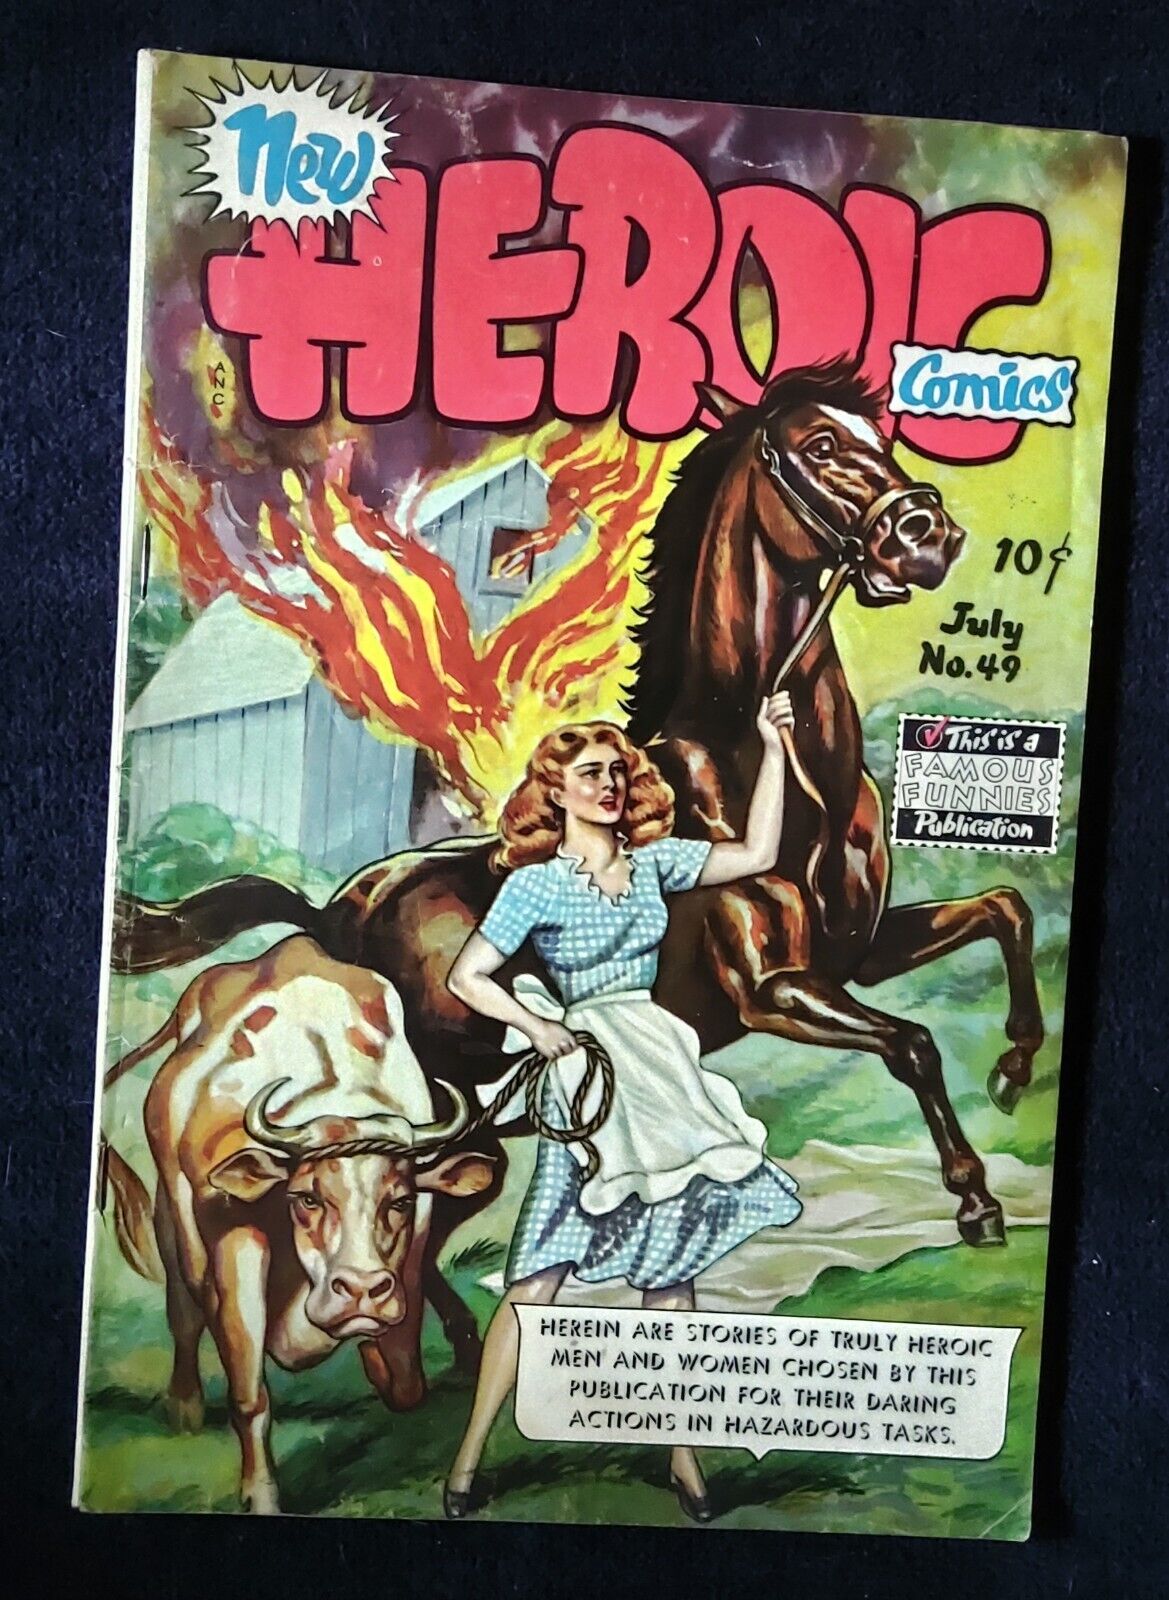 NEW HEROIC COMICS #49 ('44) VG++ Nice Copy, Oddball Cover Art